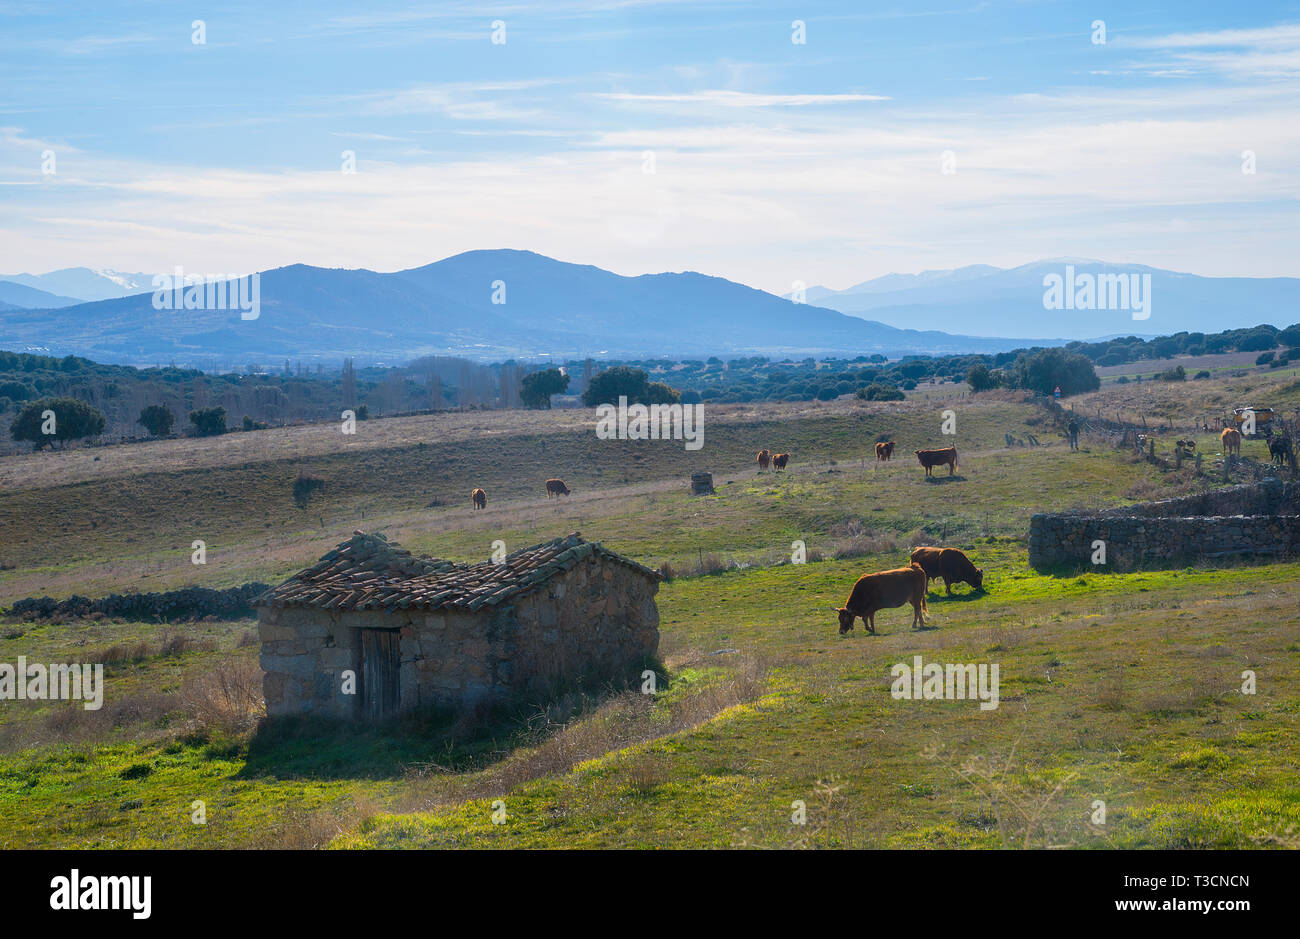 Landscape of Sierra de Gredos. Bonilla de la Sierra, Avila province, Castilla Leon, Spain. Stock Photo